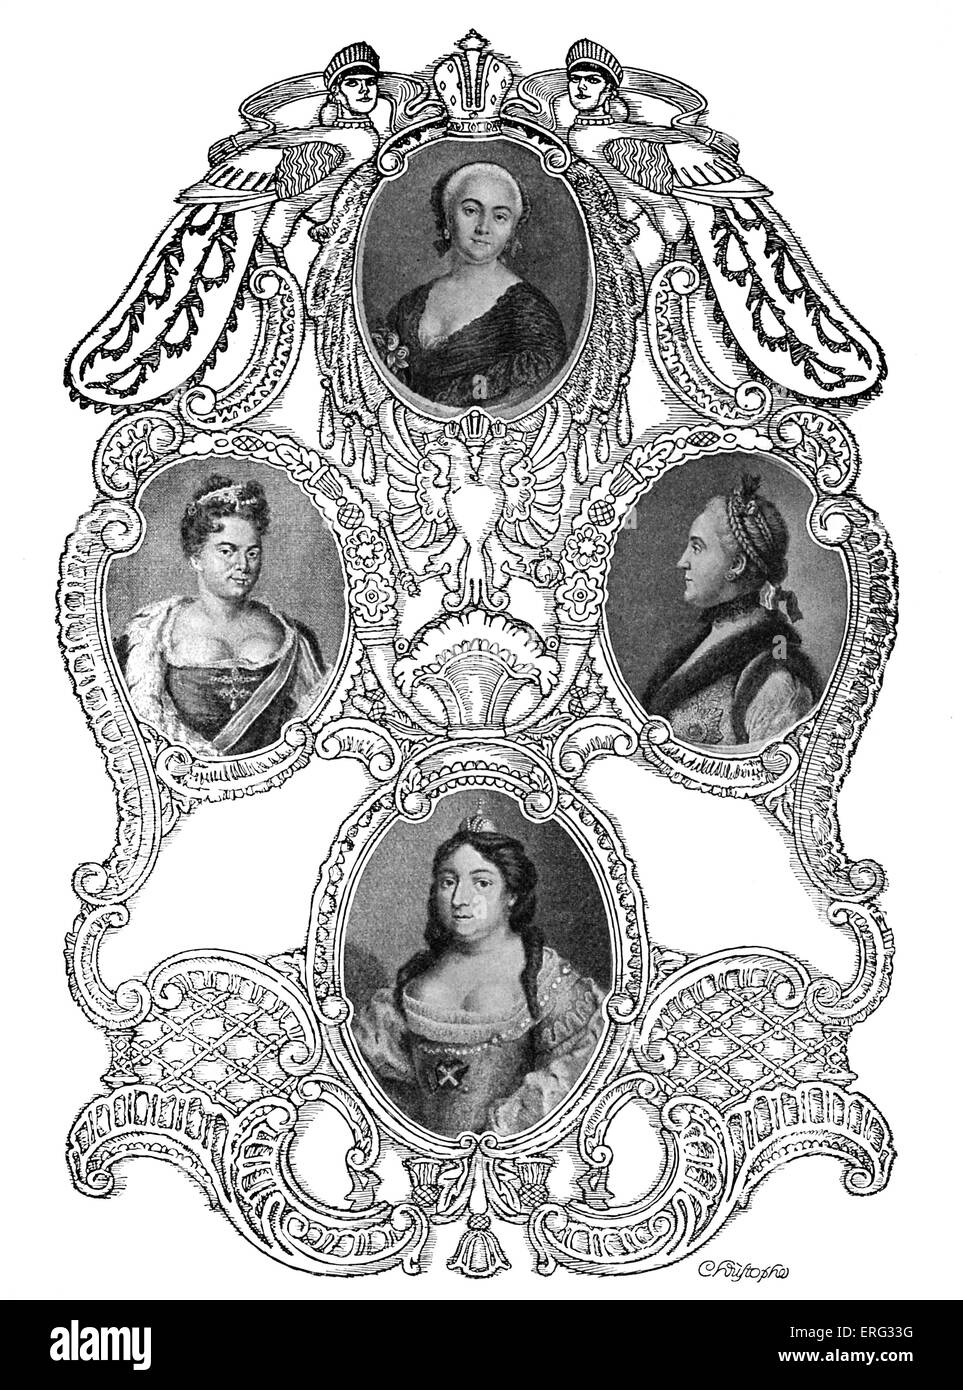 Vier russische Kaiserin. Catherine I 15 April 1684-17 Mai 1727; Anna Iwanowna 7. Februar 1693 - 28. Oktober 1740; Elizabeth ich 29. Dezember 1709 - 5. Januar 1762; Katharina II. 2. Mai 1729 - 17. November 1796. Stockfoto